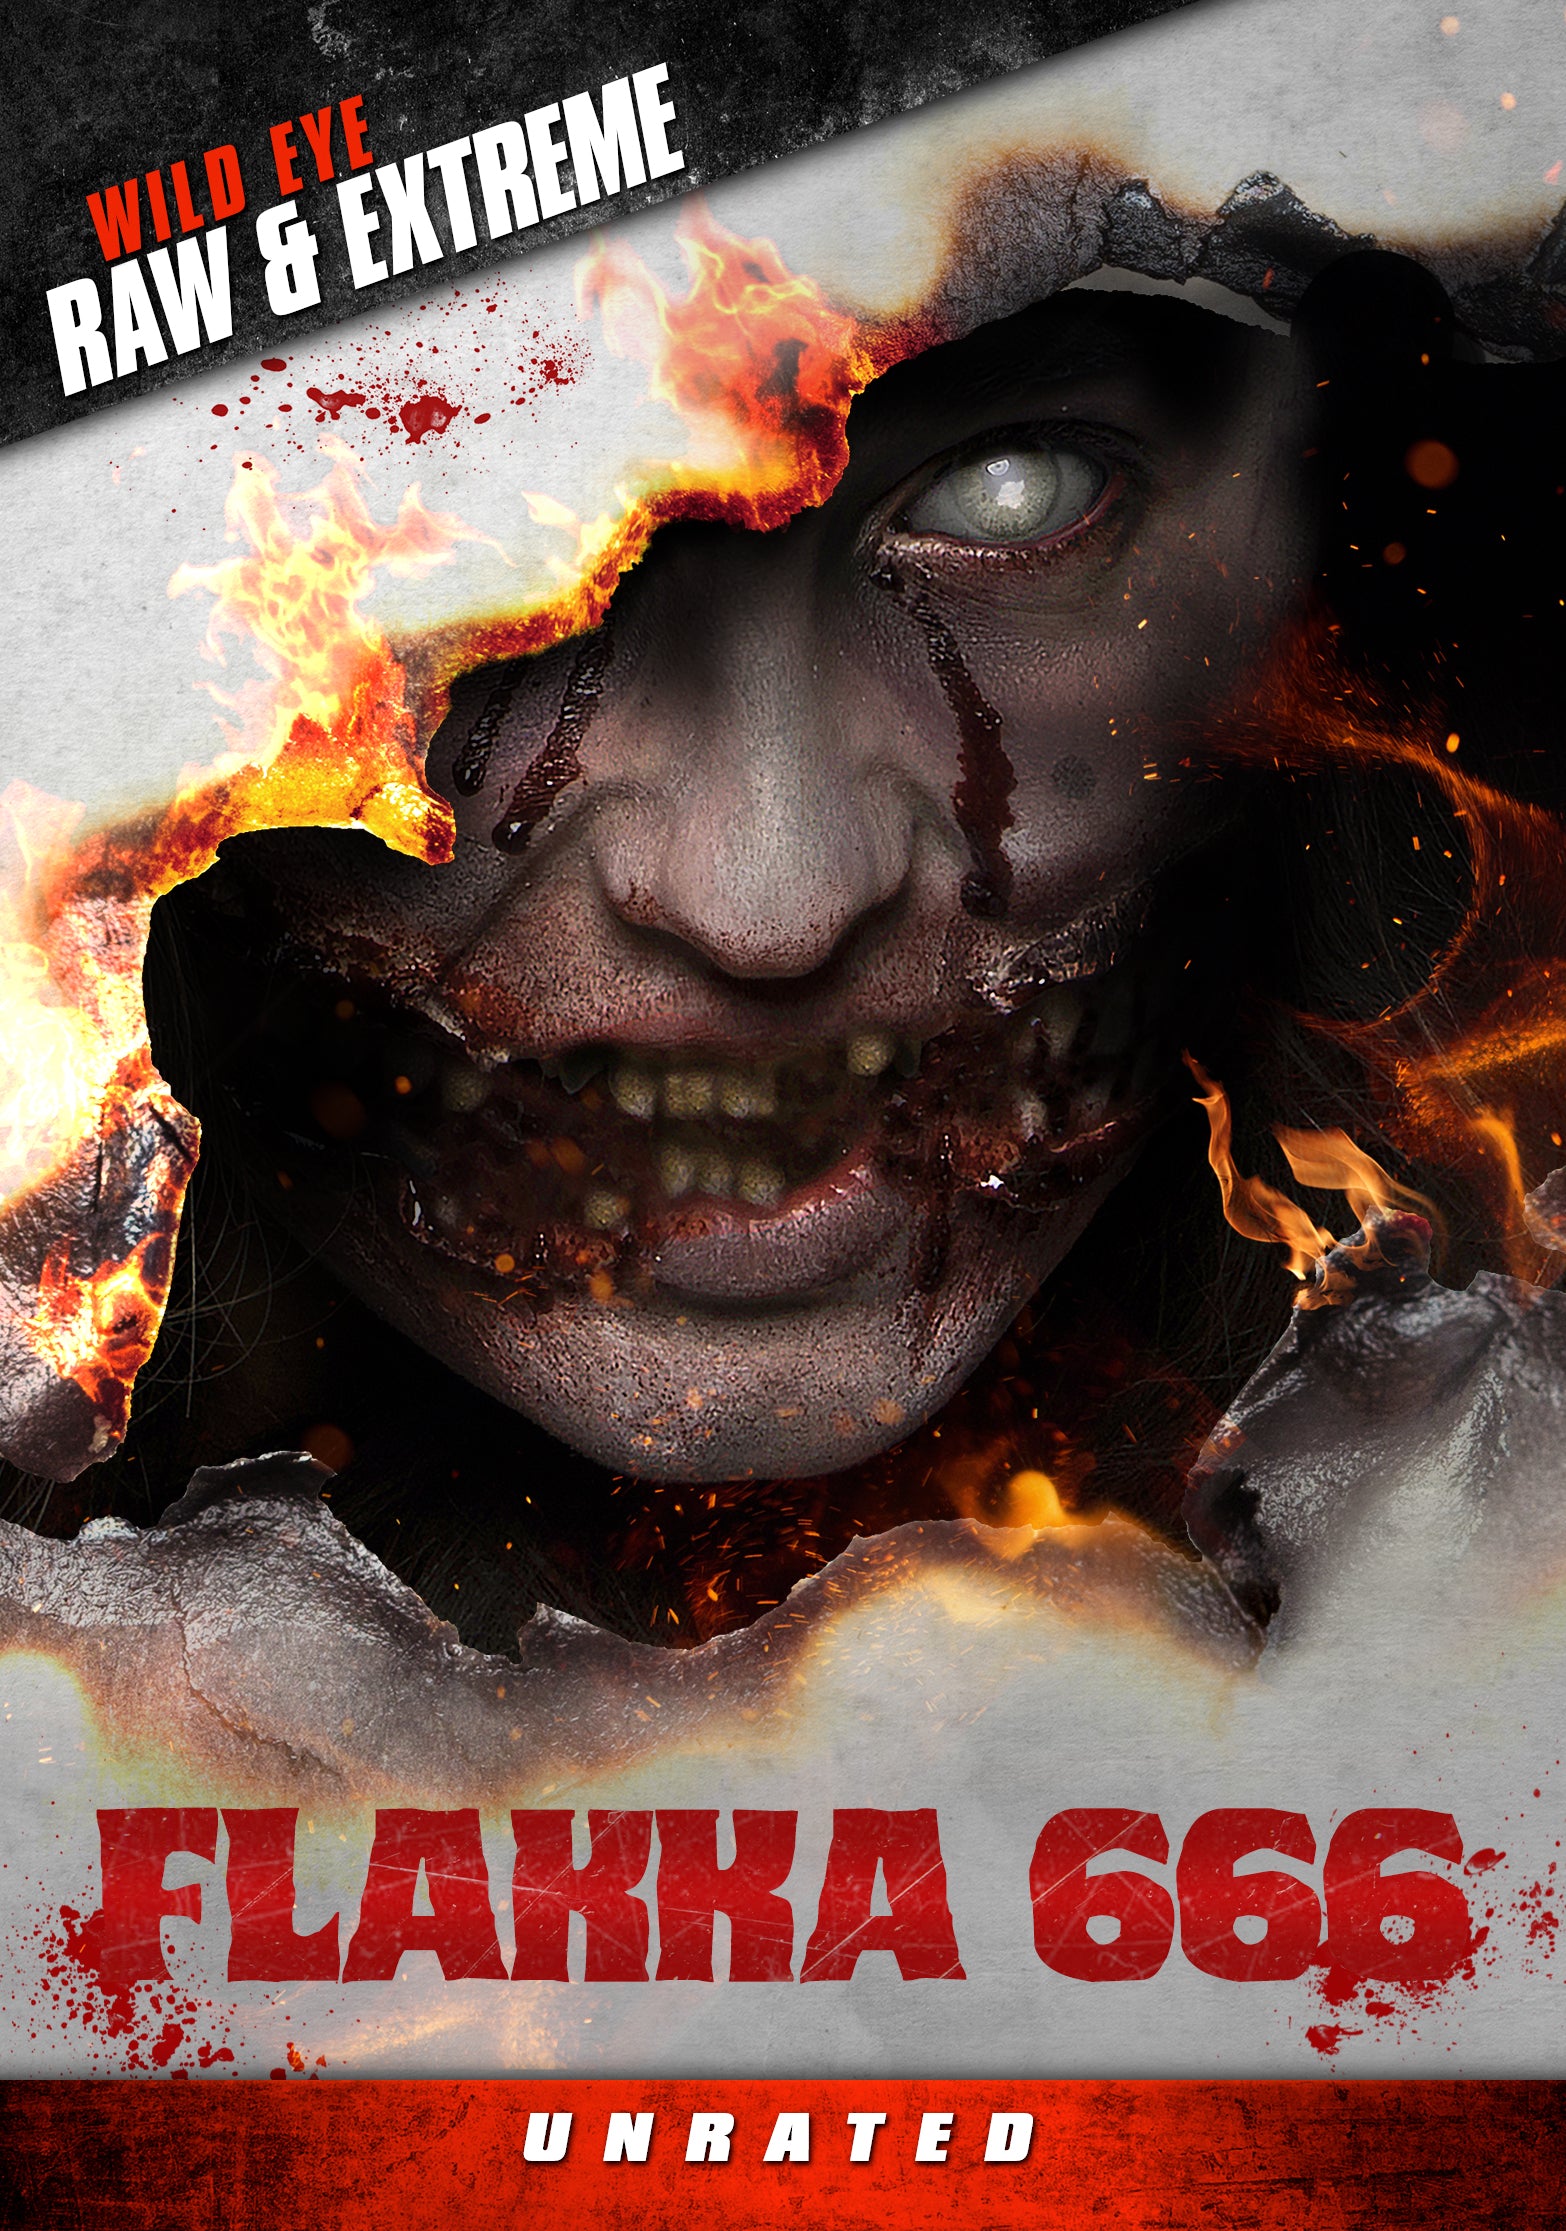 FLAKKA 666 DVD